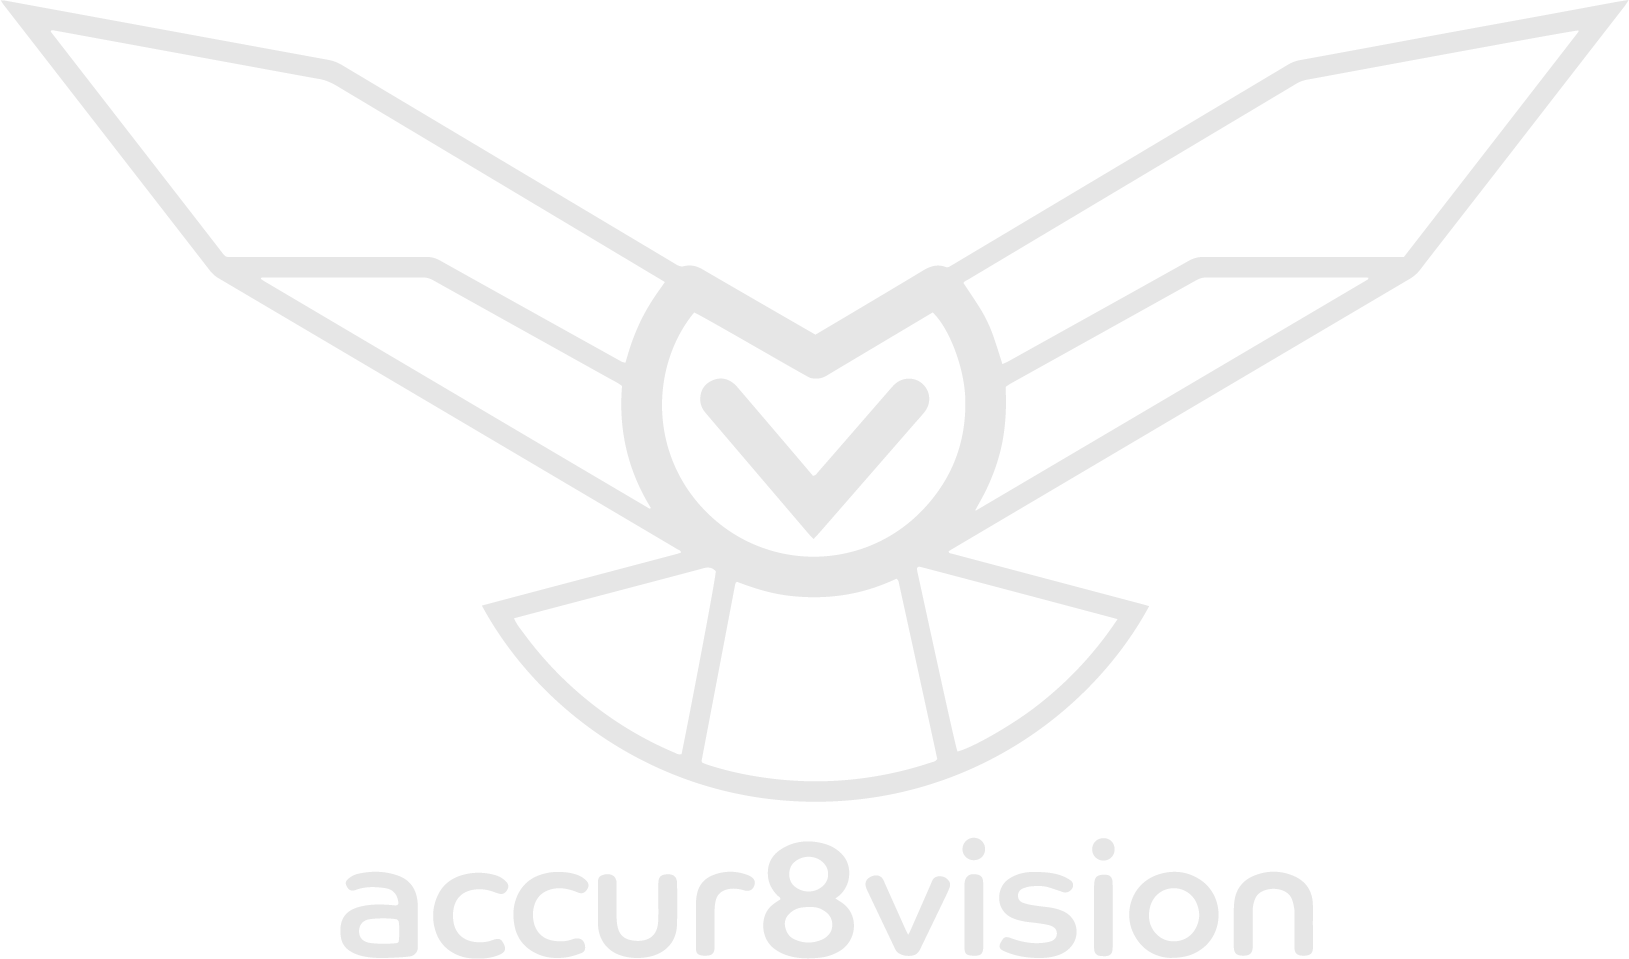 logo Accur8vision in scala di grigi